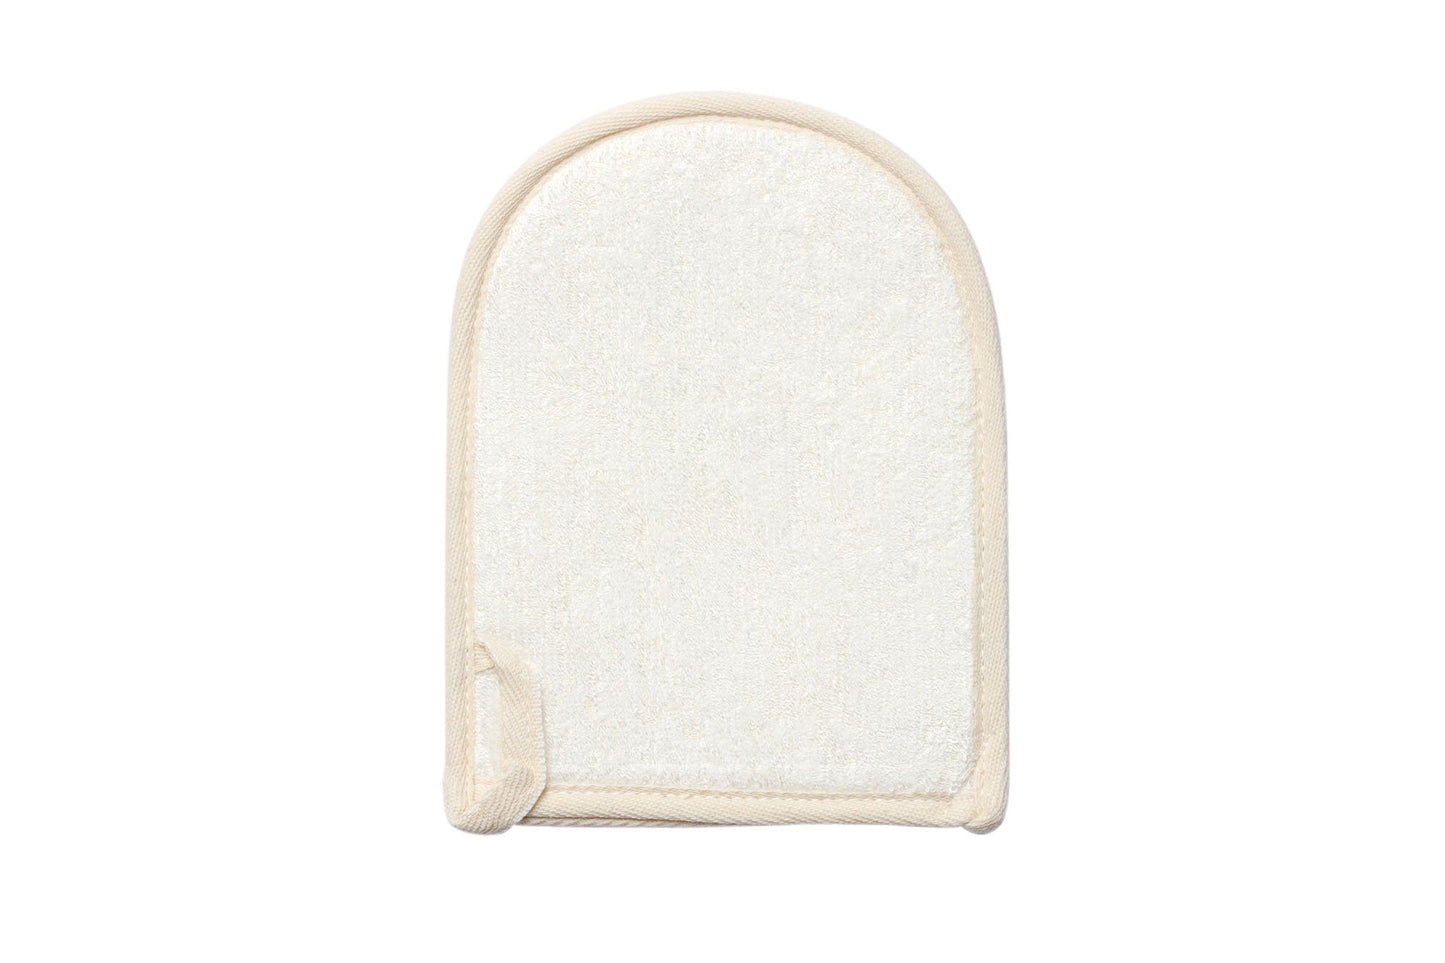 Back of bathing mitt with white background